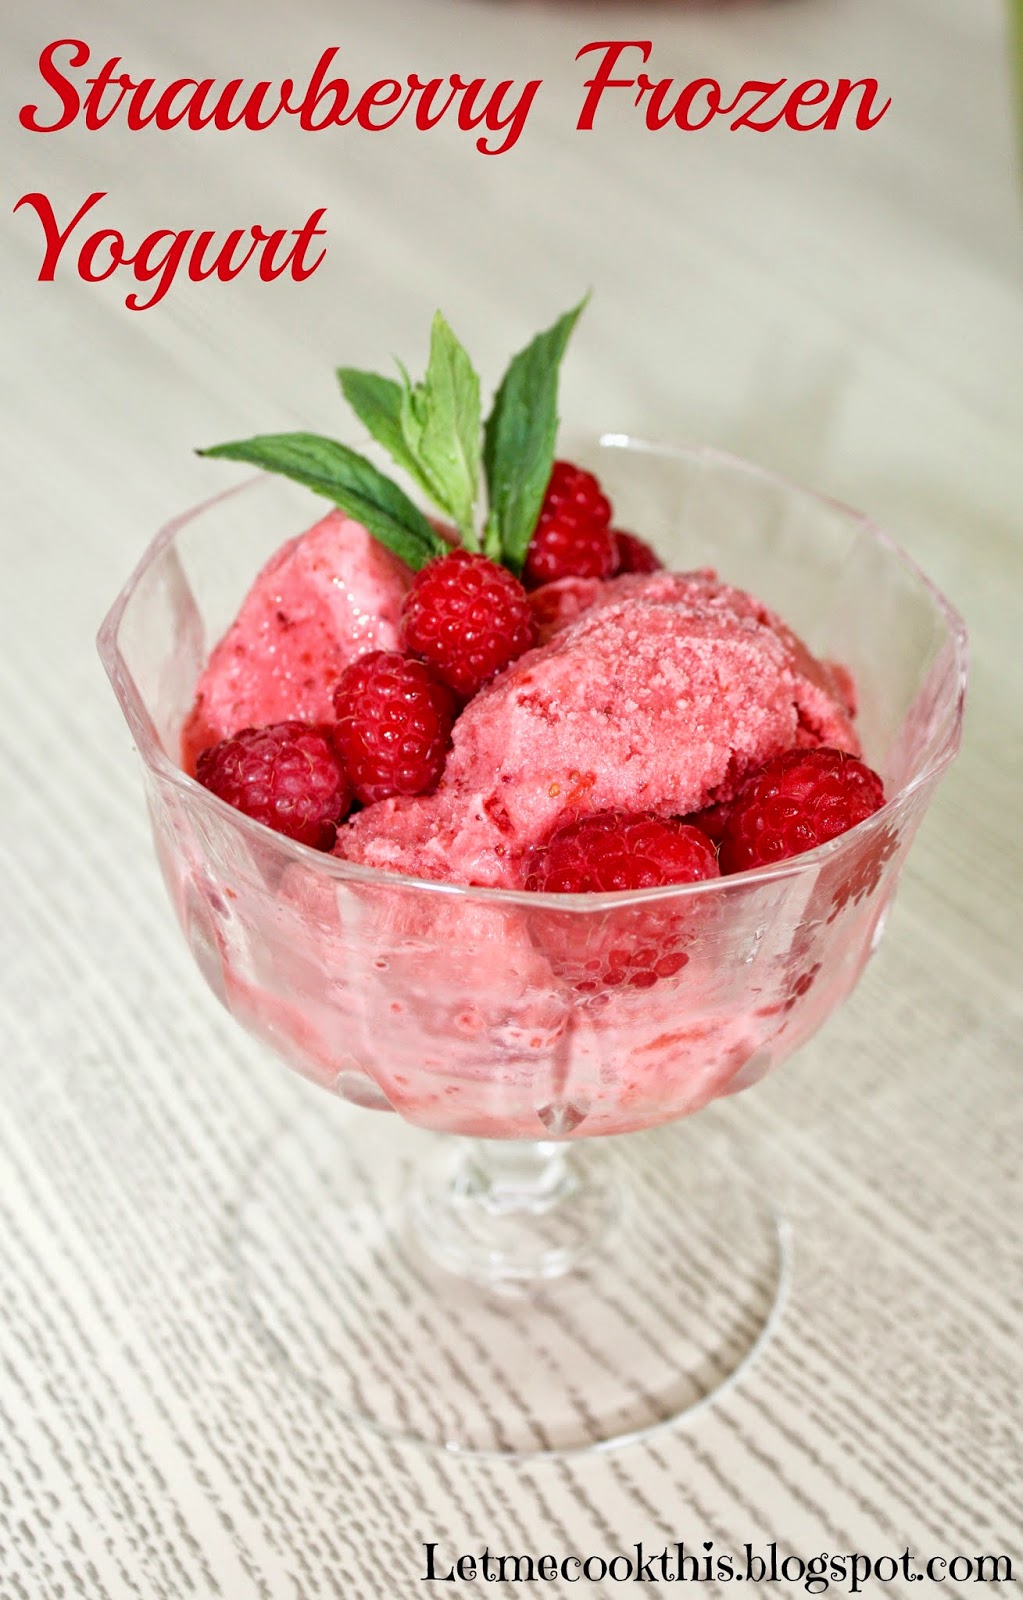 Strawberry-frozen-yogurt